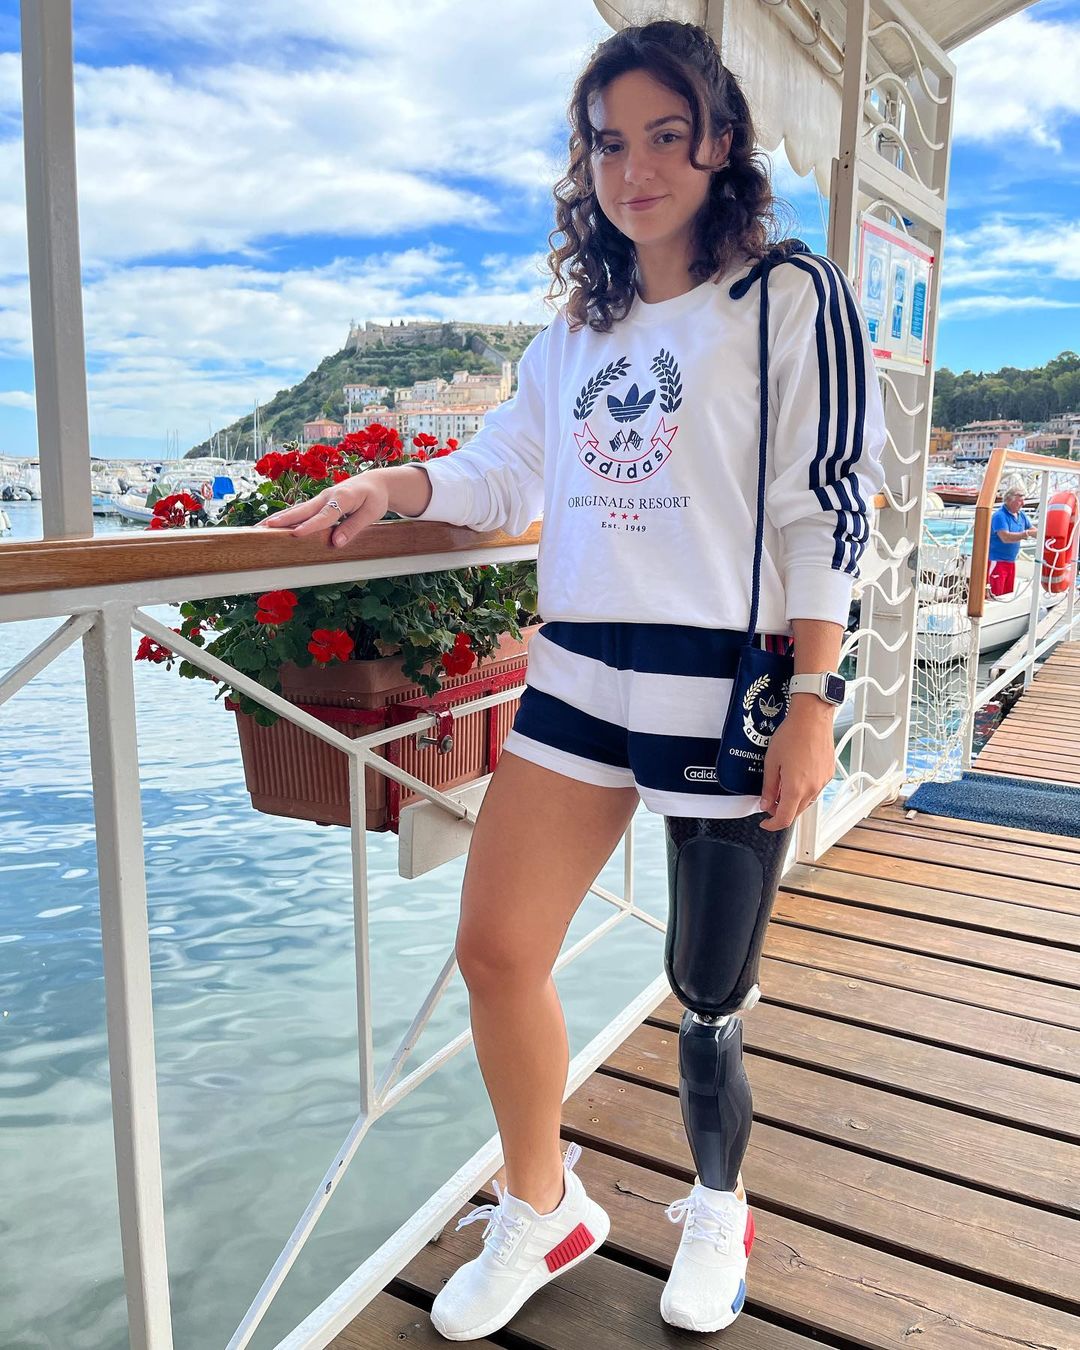 Ambra Sabatini, l’atleta paralimpica più veloce del mondo (Instagram)